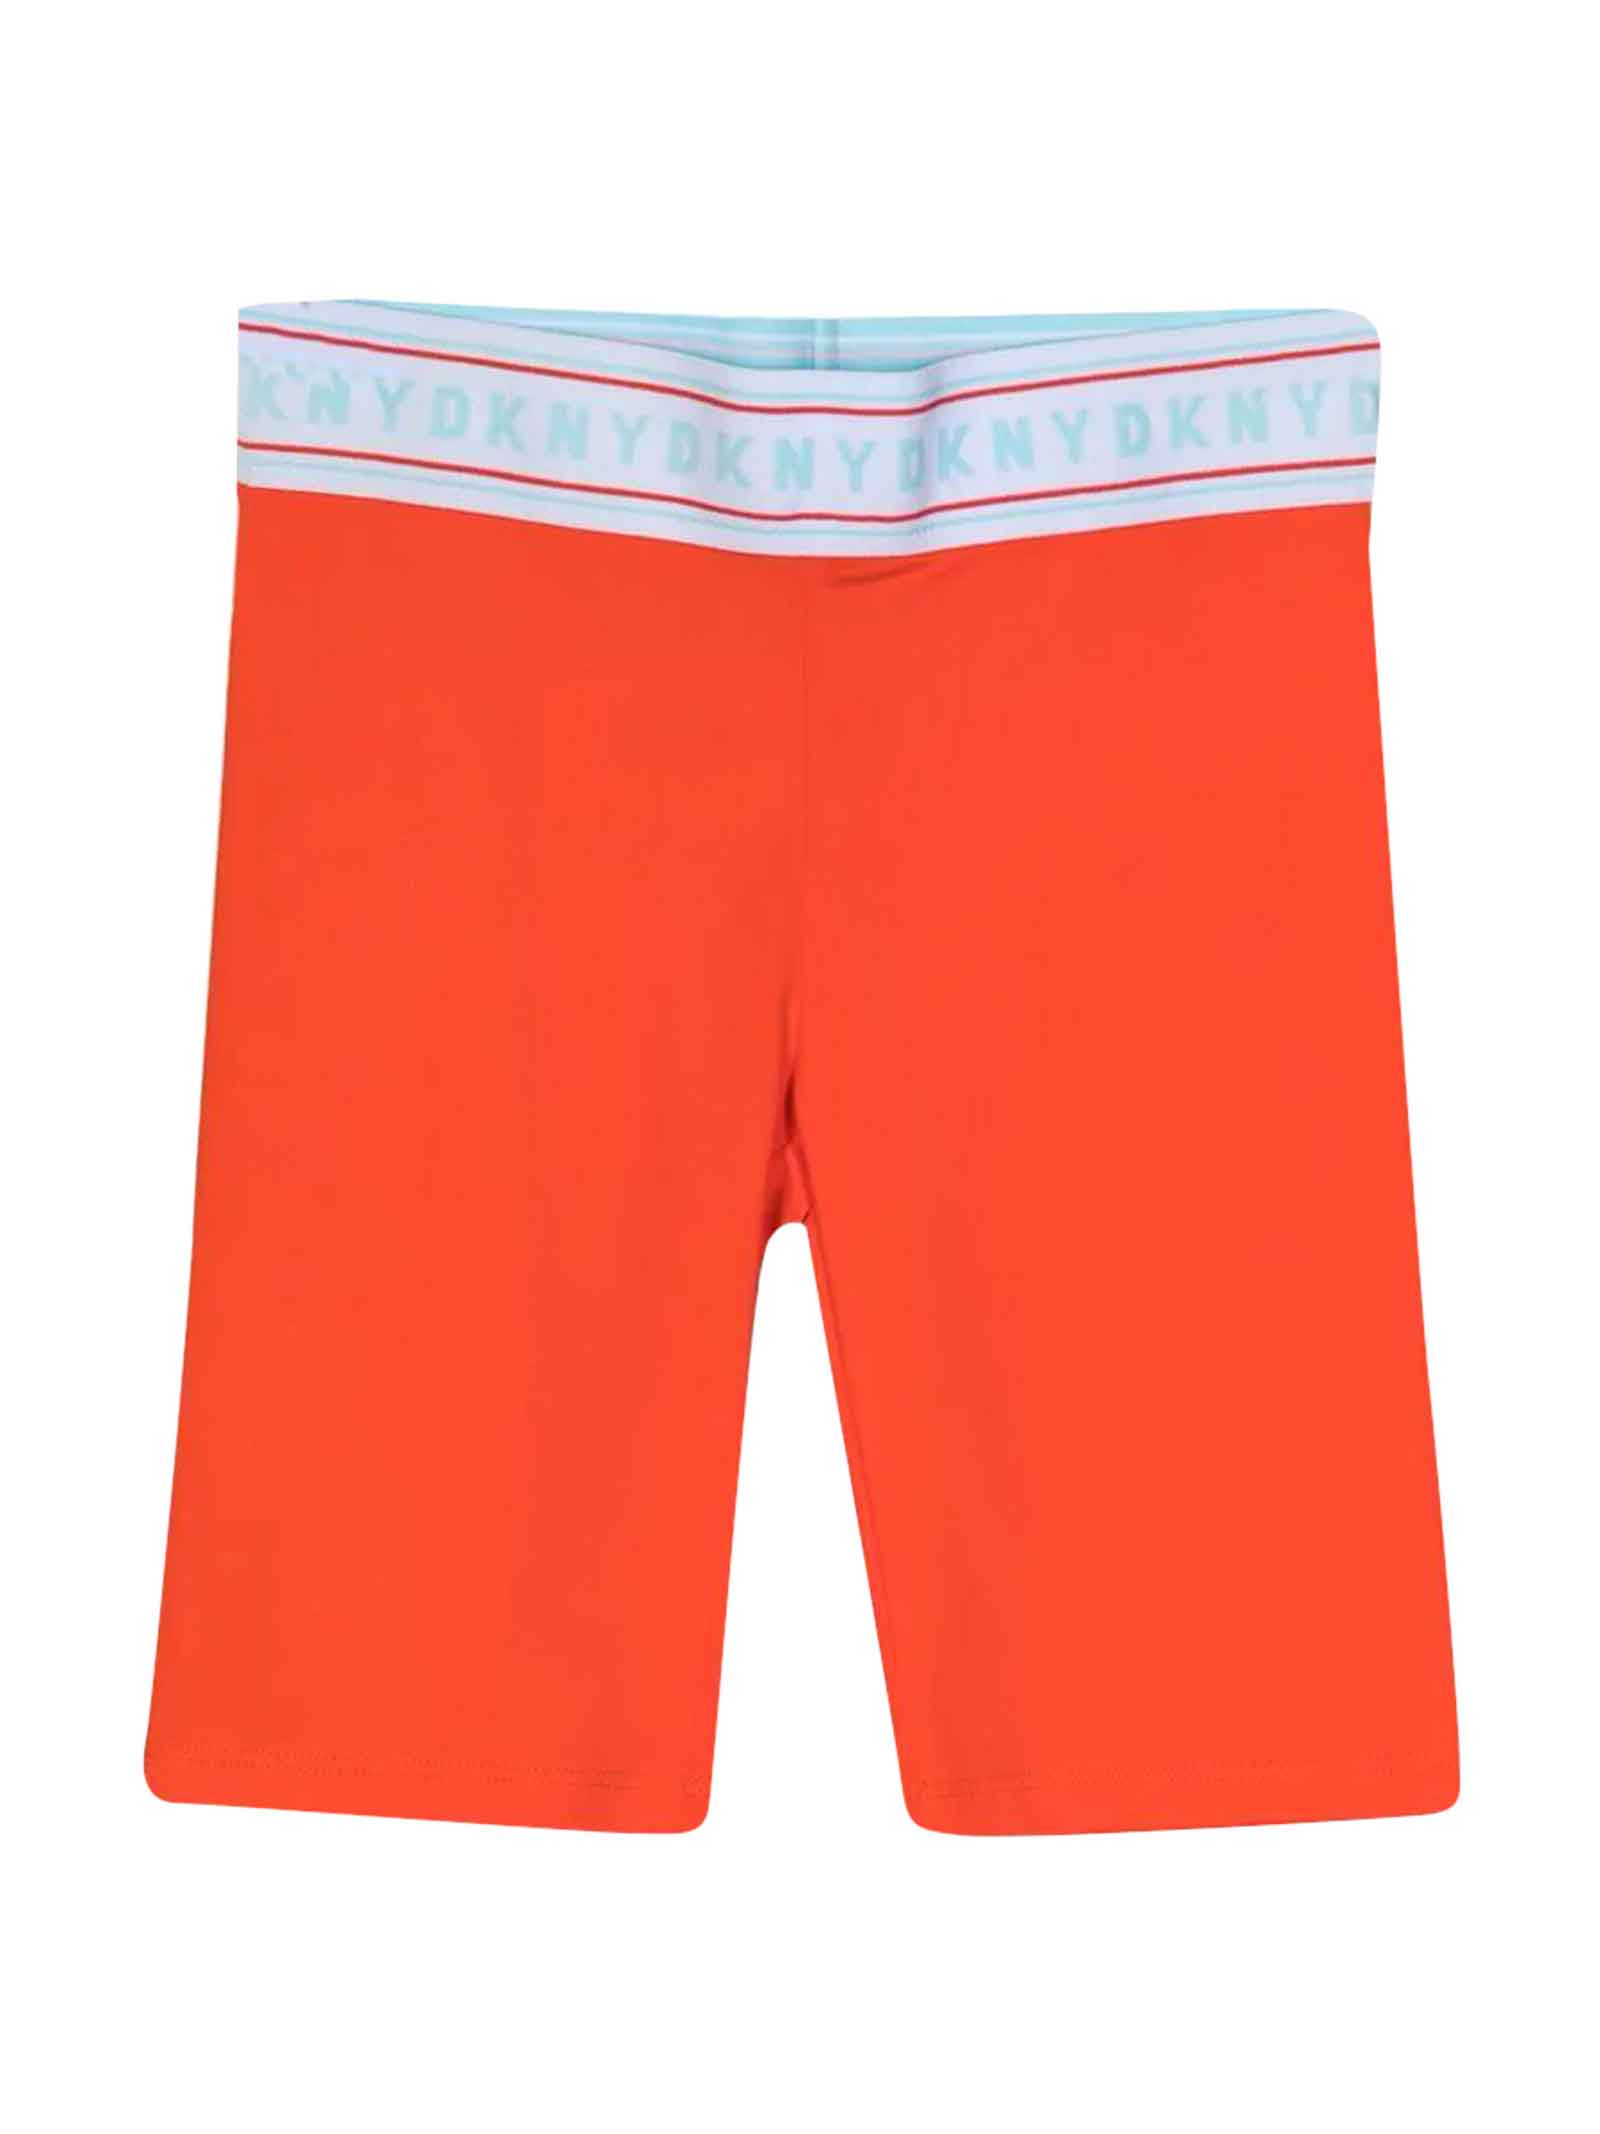 DKNY Orange Cycling Shorts Teen Unisex